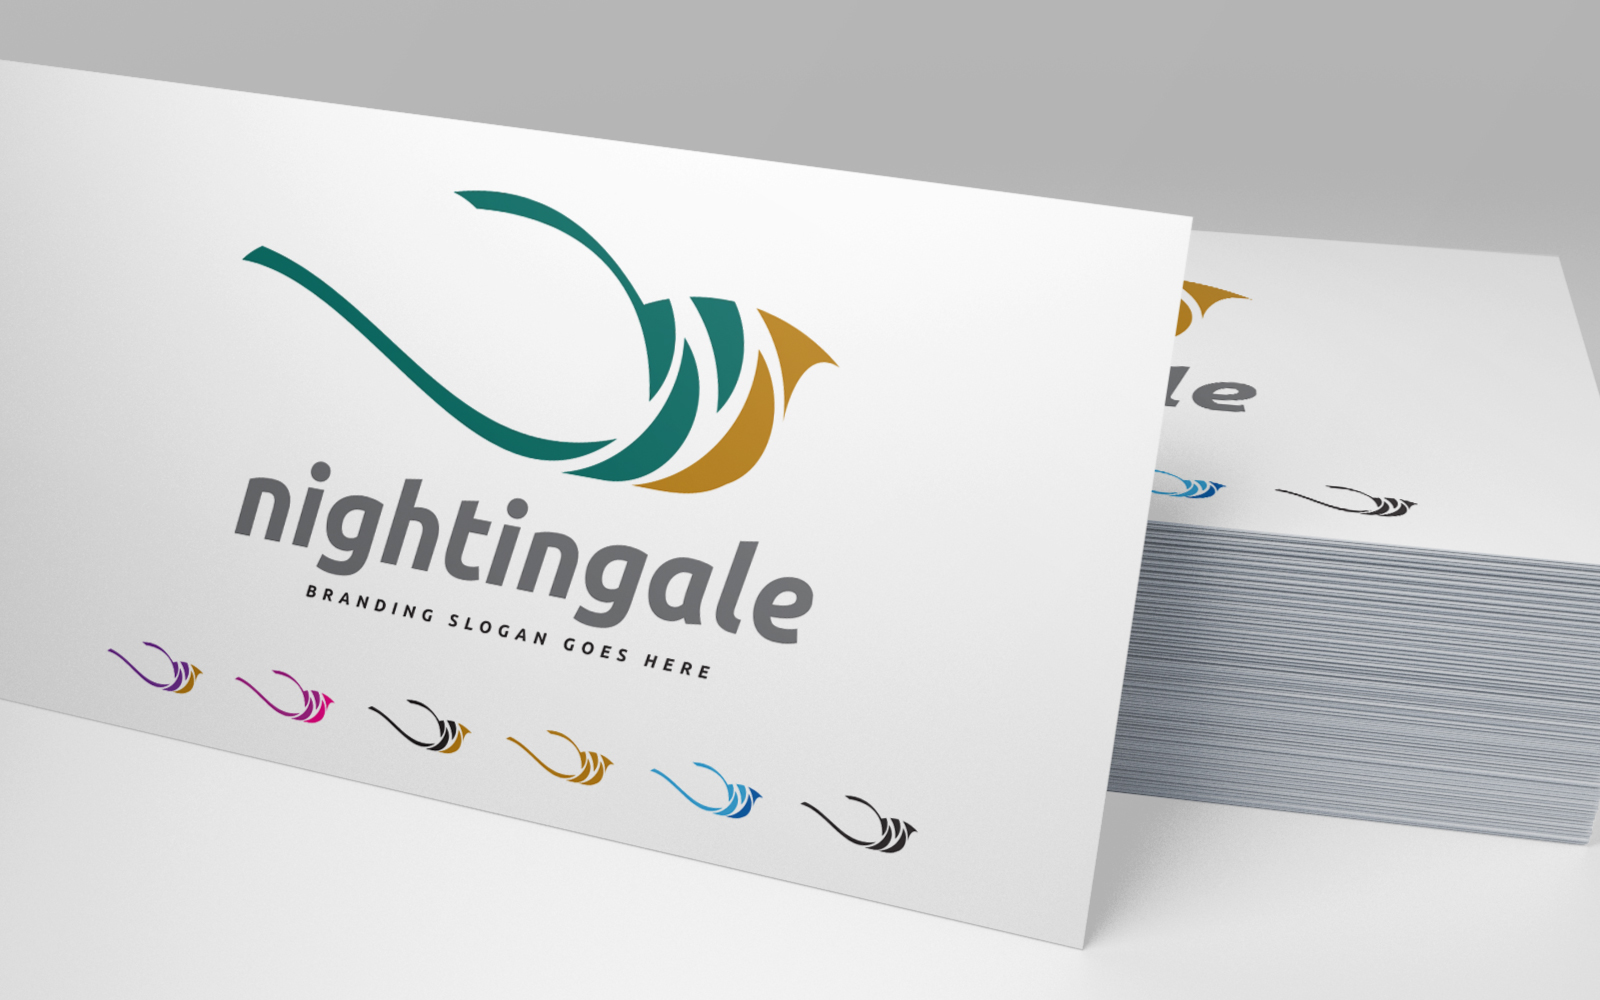 Travel and Tourism Nightingale Logo